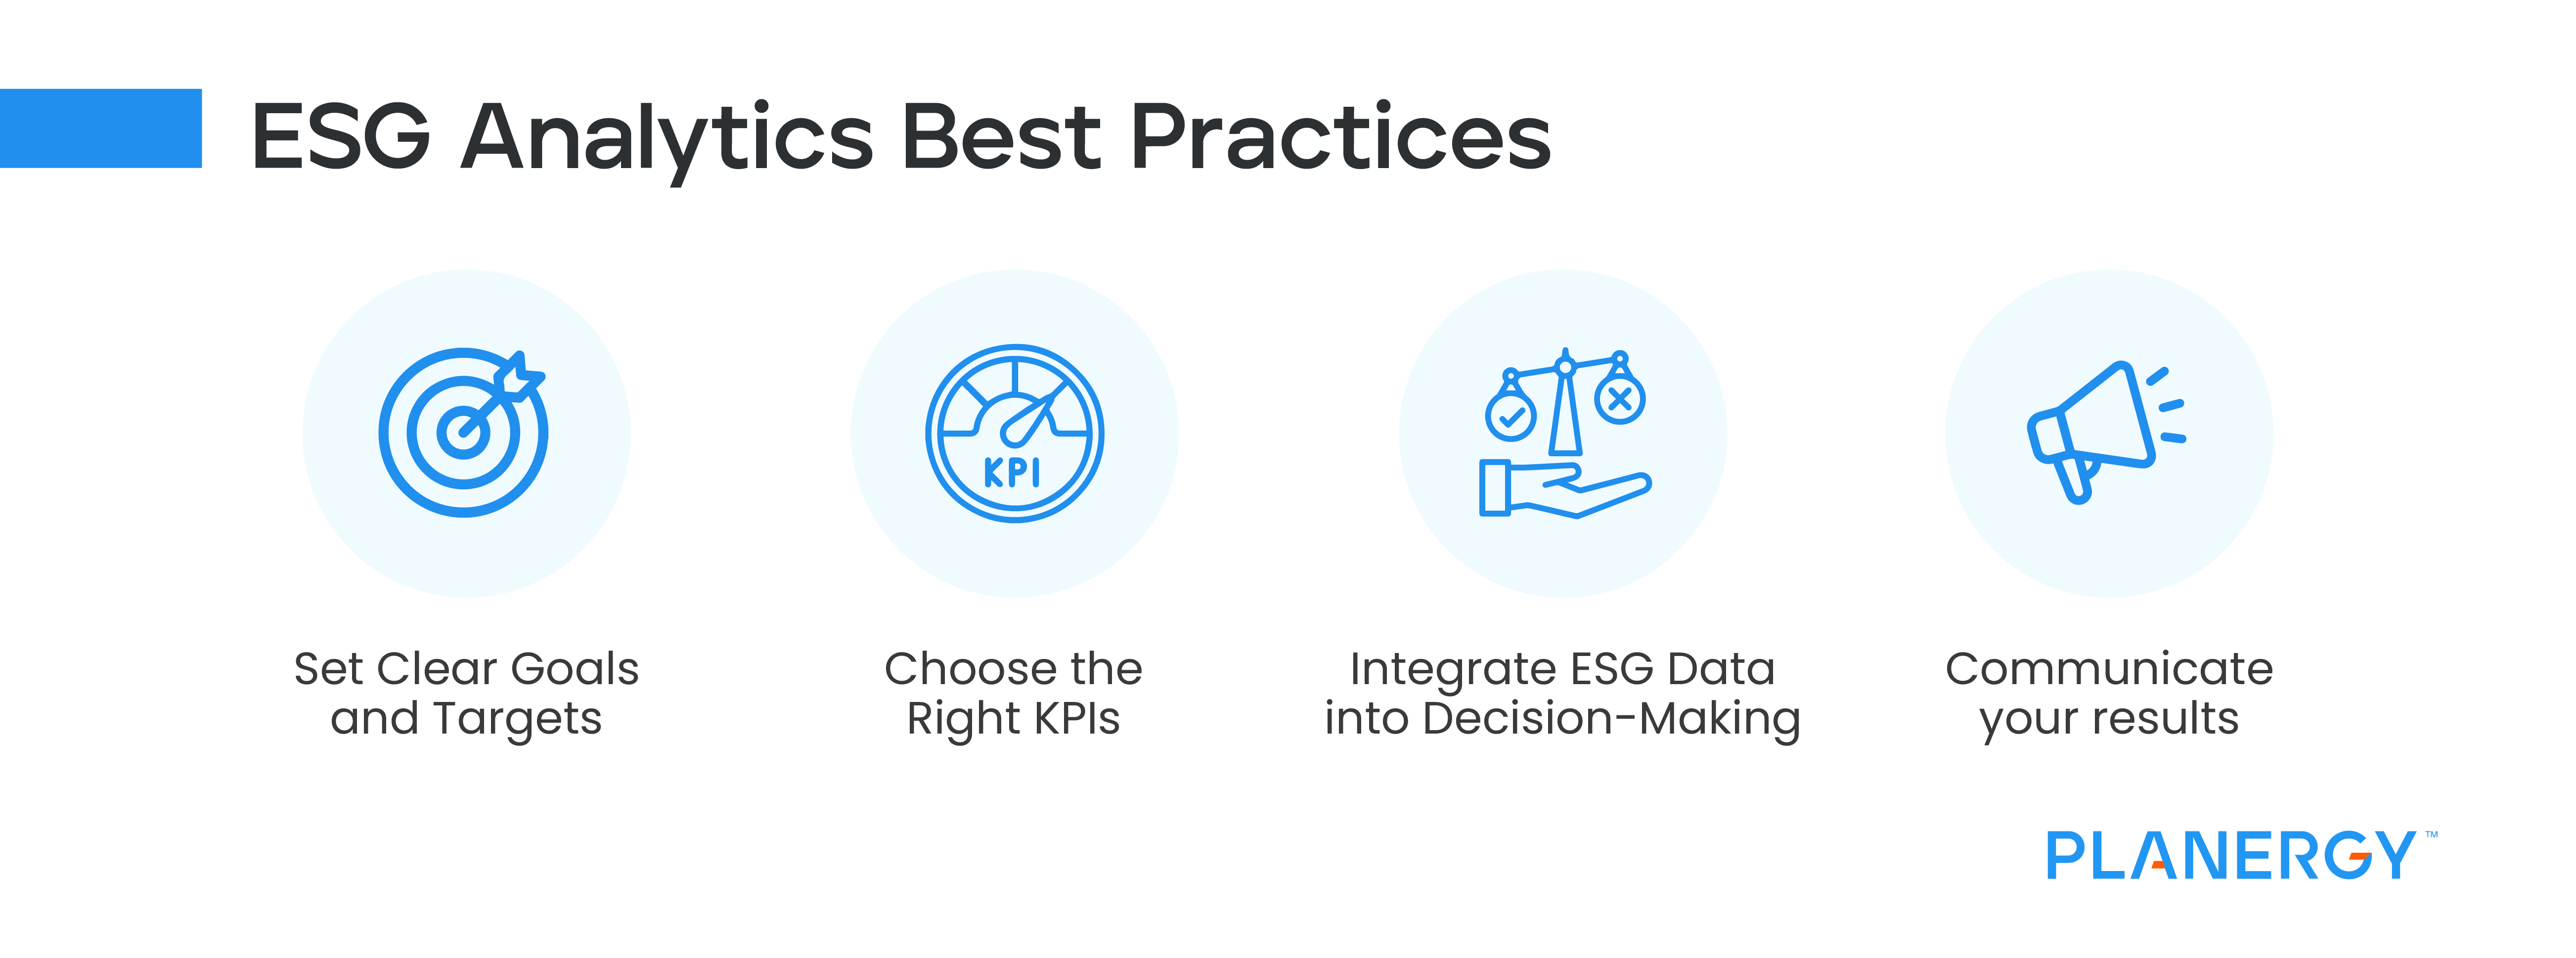 ESG Analytics Best Practices